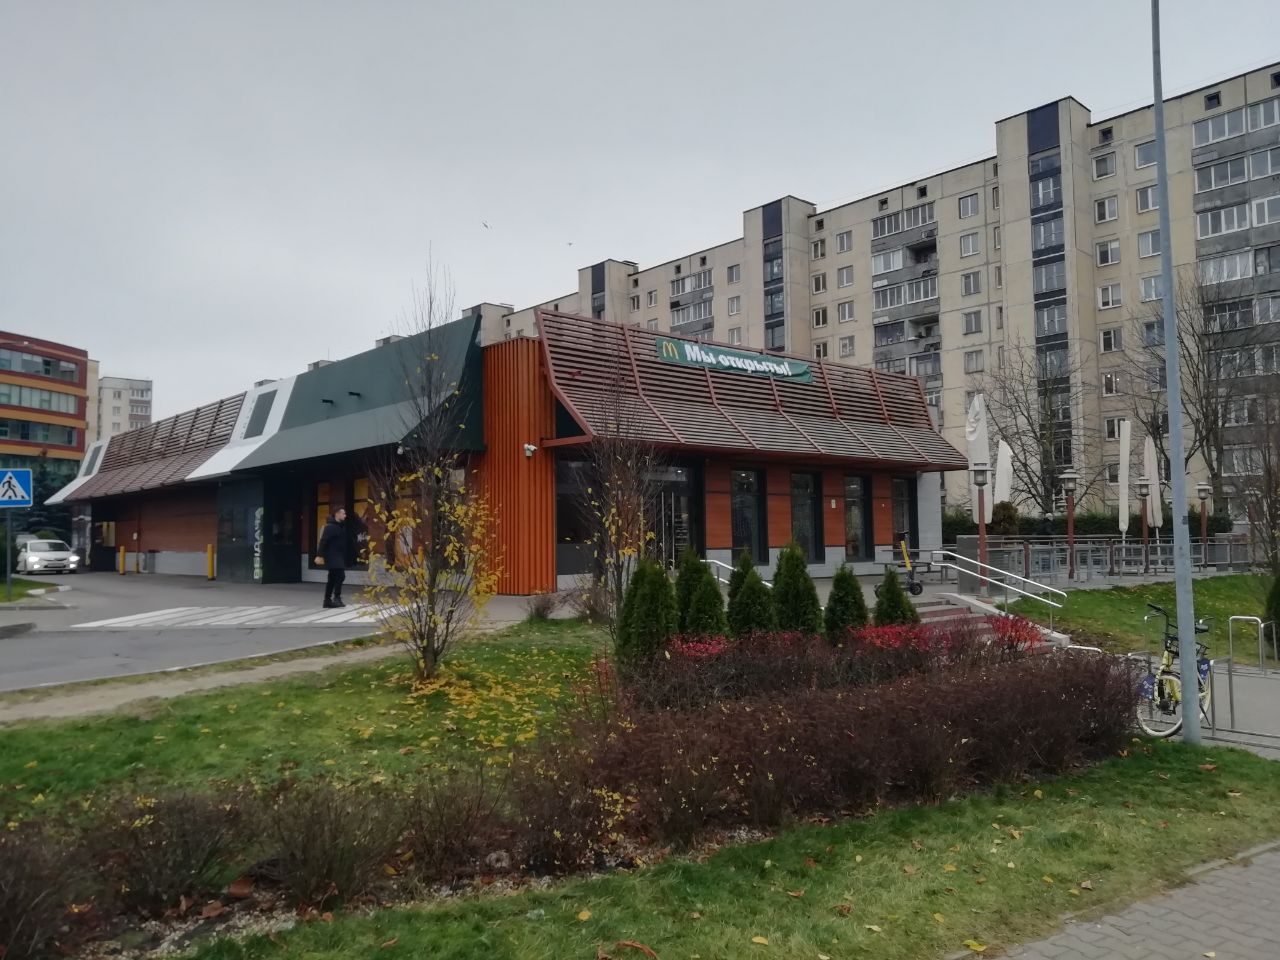 McDonald’s в Беларуси запустил новый сайт. На нем нет никаких логотипов